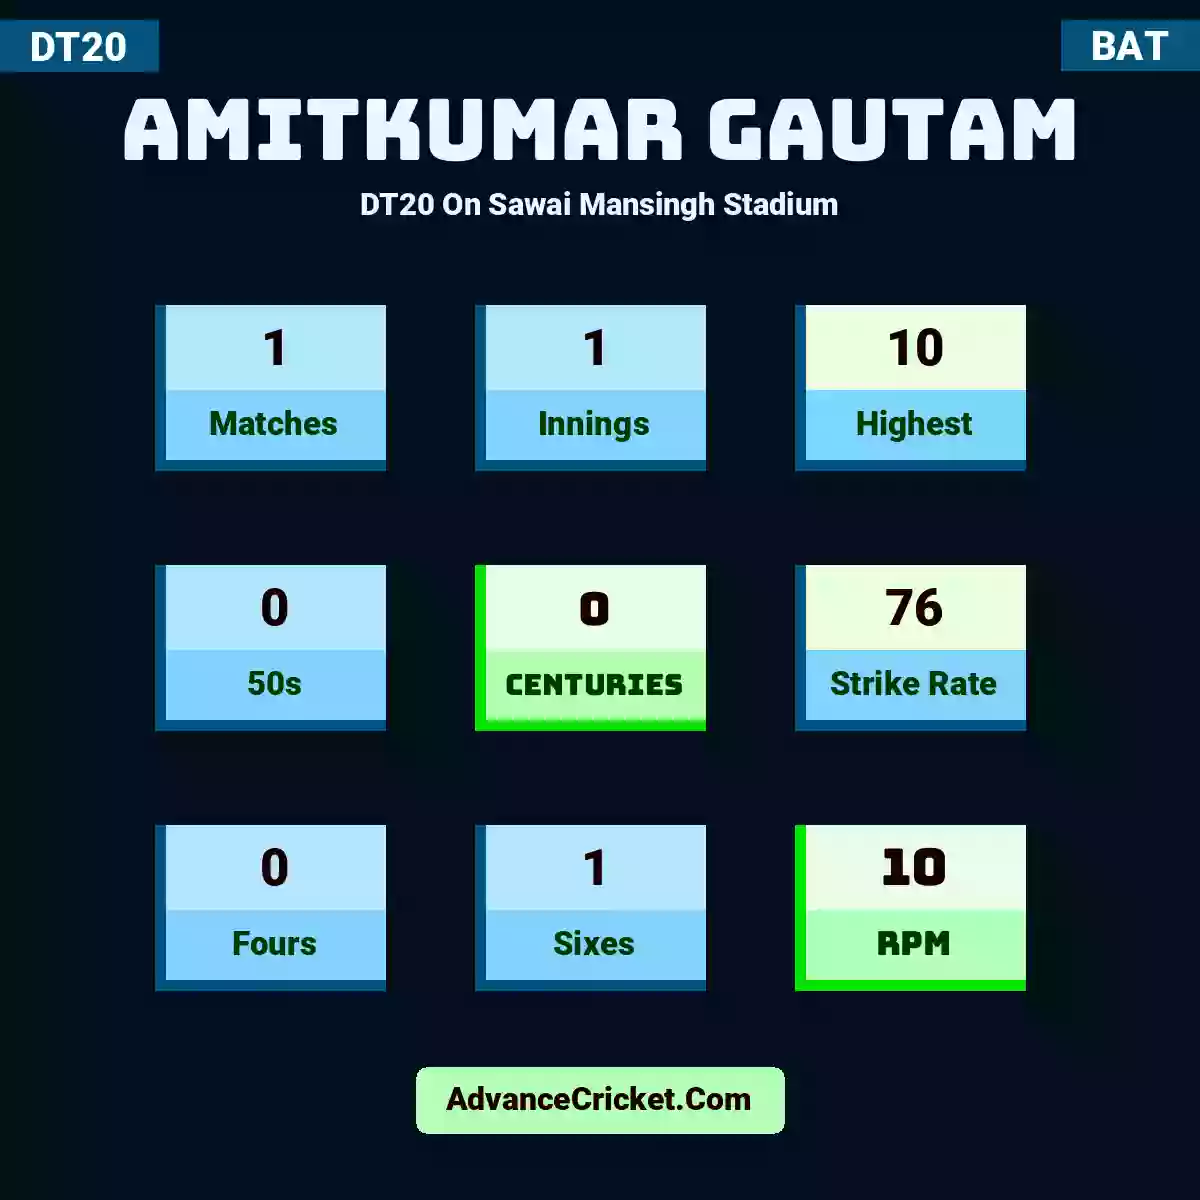 Amitkumar Gautam DT20  On Sawai Mansingh Stadium, Amitkumar Gautam played 1 matches, scored 10 runs as highest, 0 half-centuries, and 0 centuries, with a strike rate of 76. A.Gautam hit 0 fours and 1 sixes, with an RPM of 10.